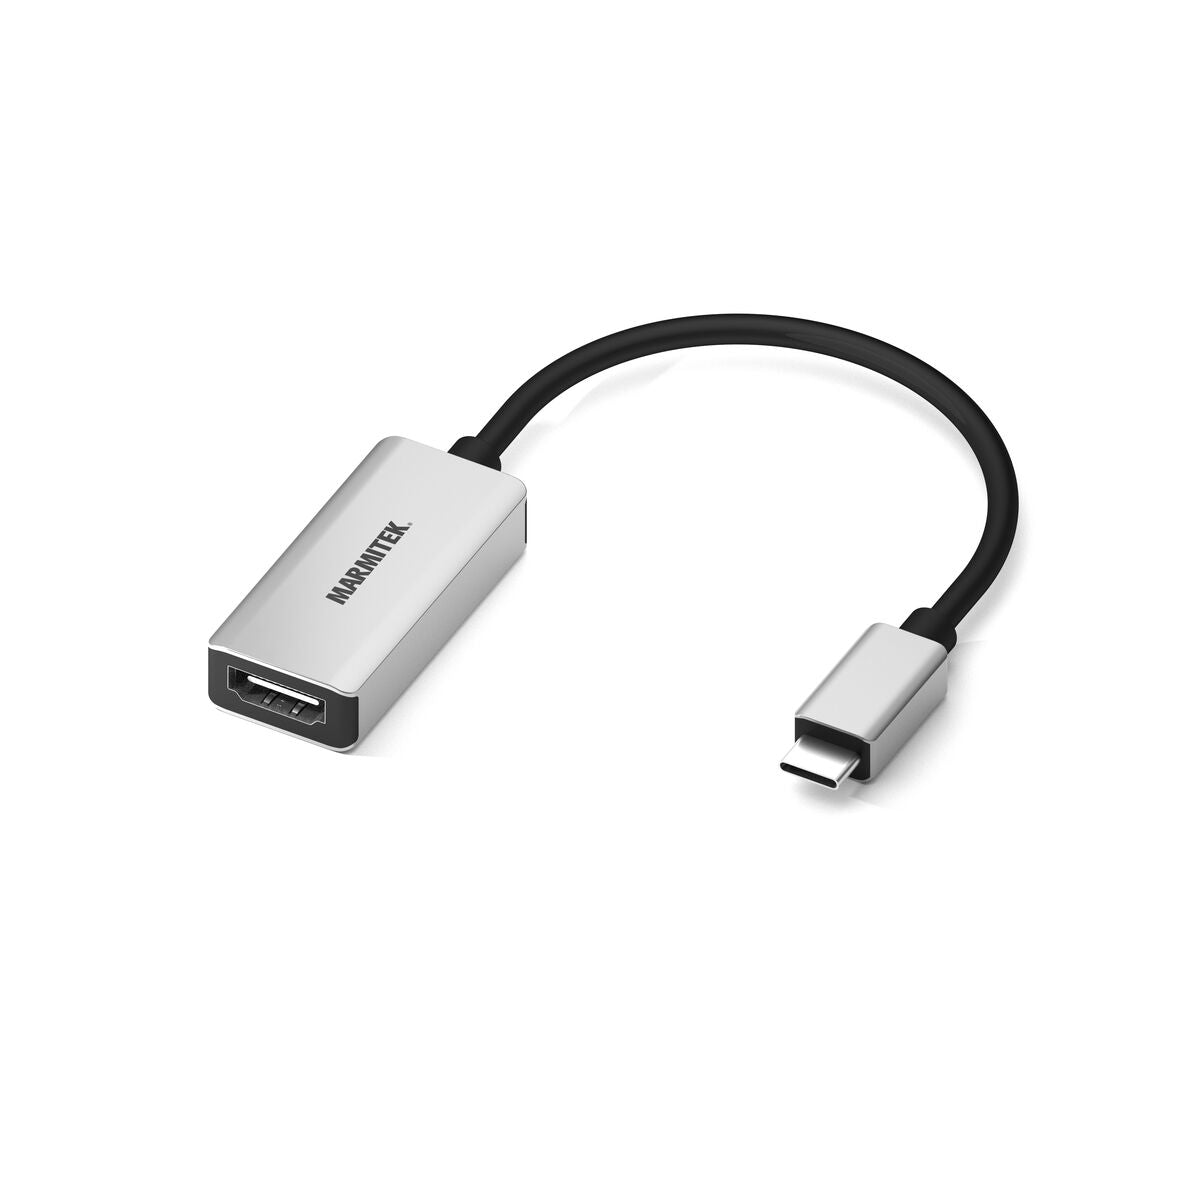 Comprar adaptador USB tipo C a HDMI?